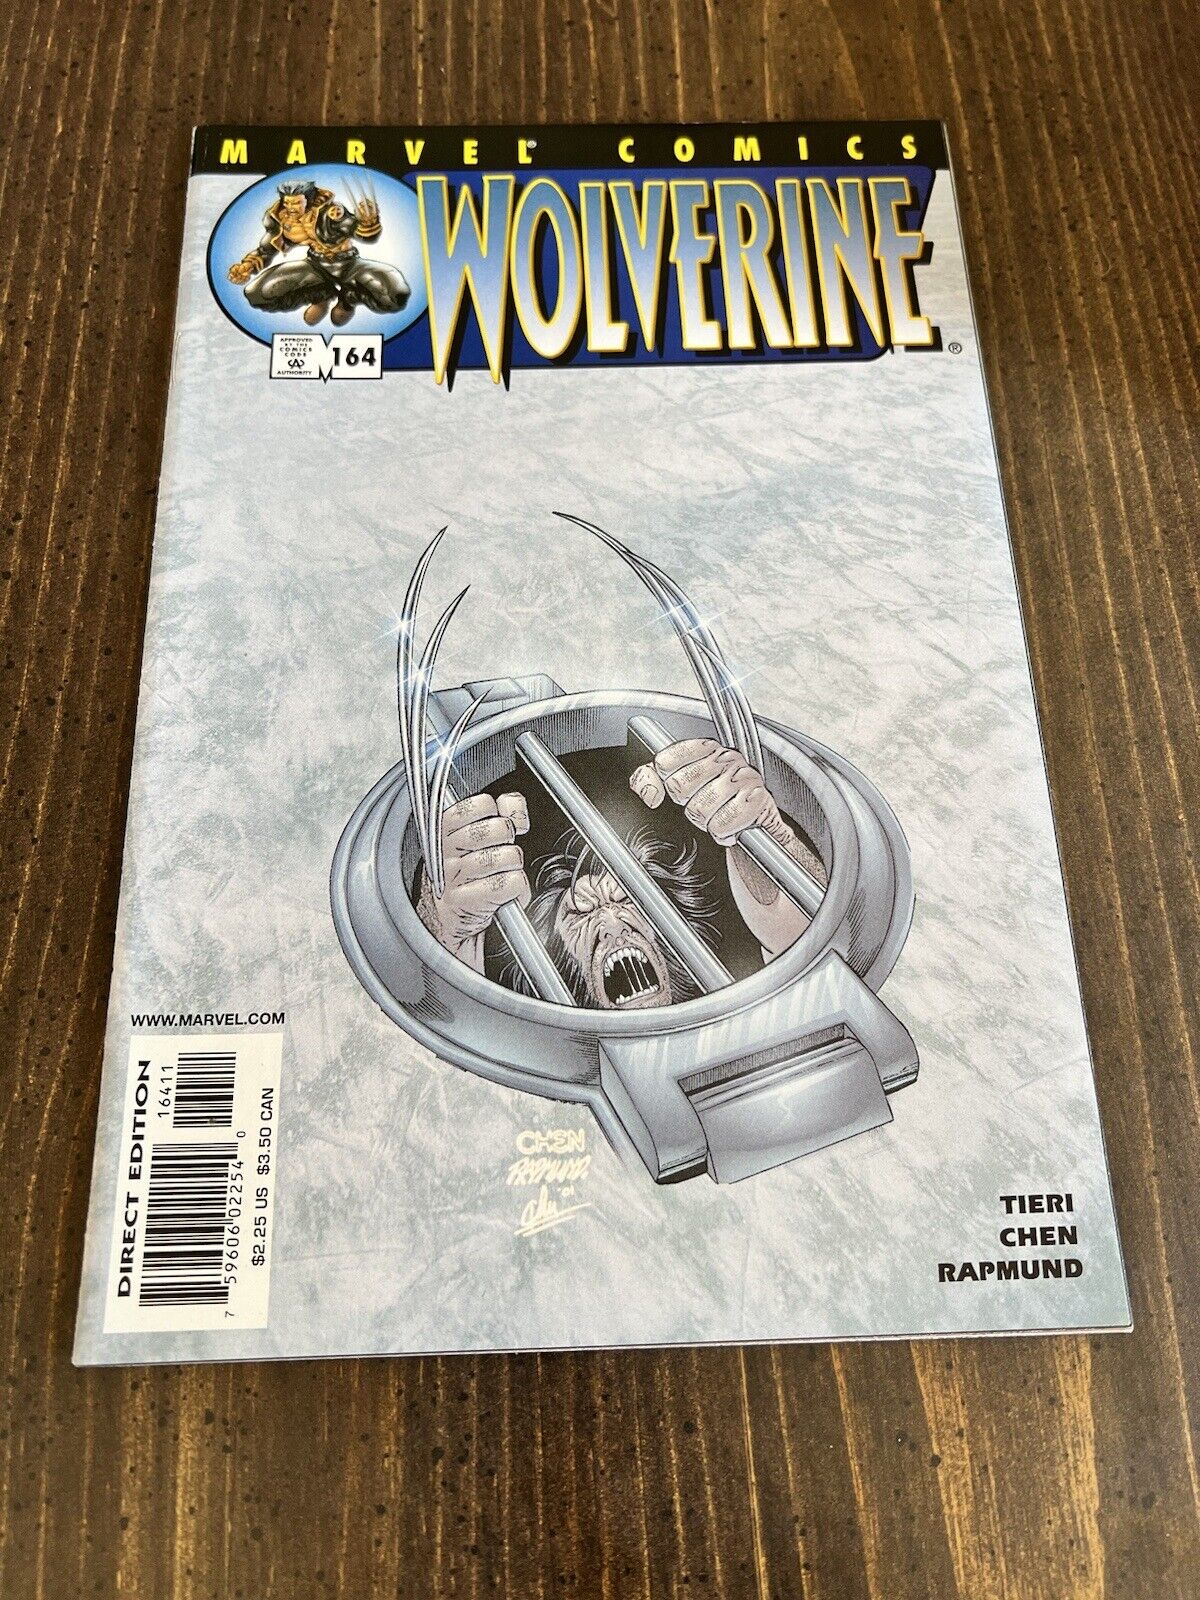 Wolverine #164/Good Copy